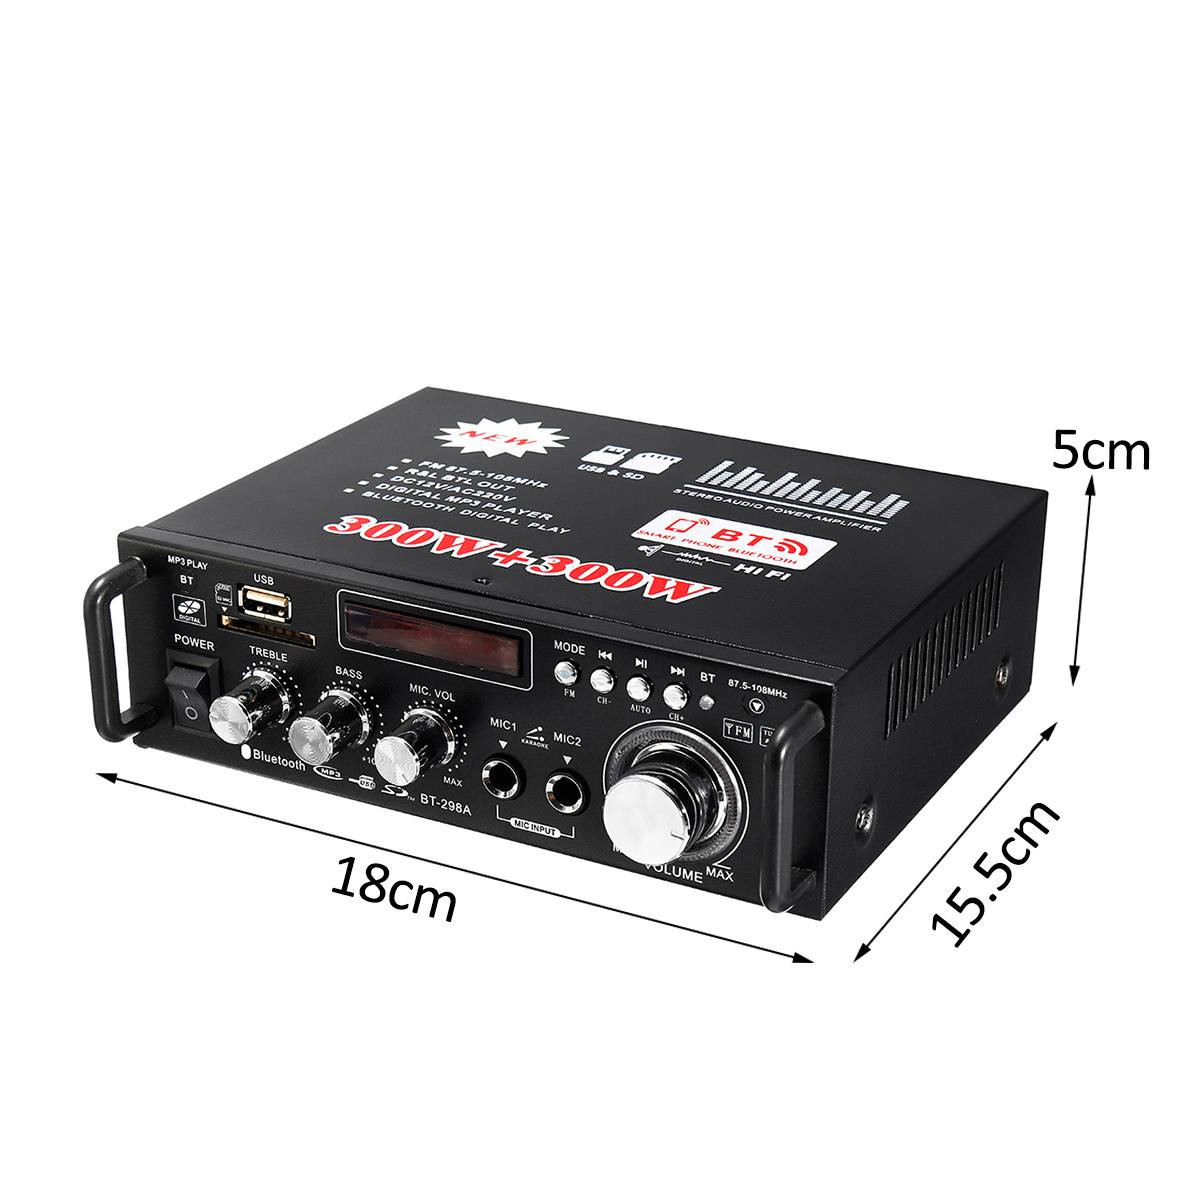 Ampli Mini Karaoke Bluetooth Cao Cấp BT-298A AZONE